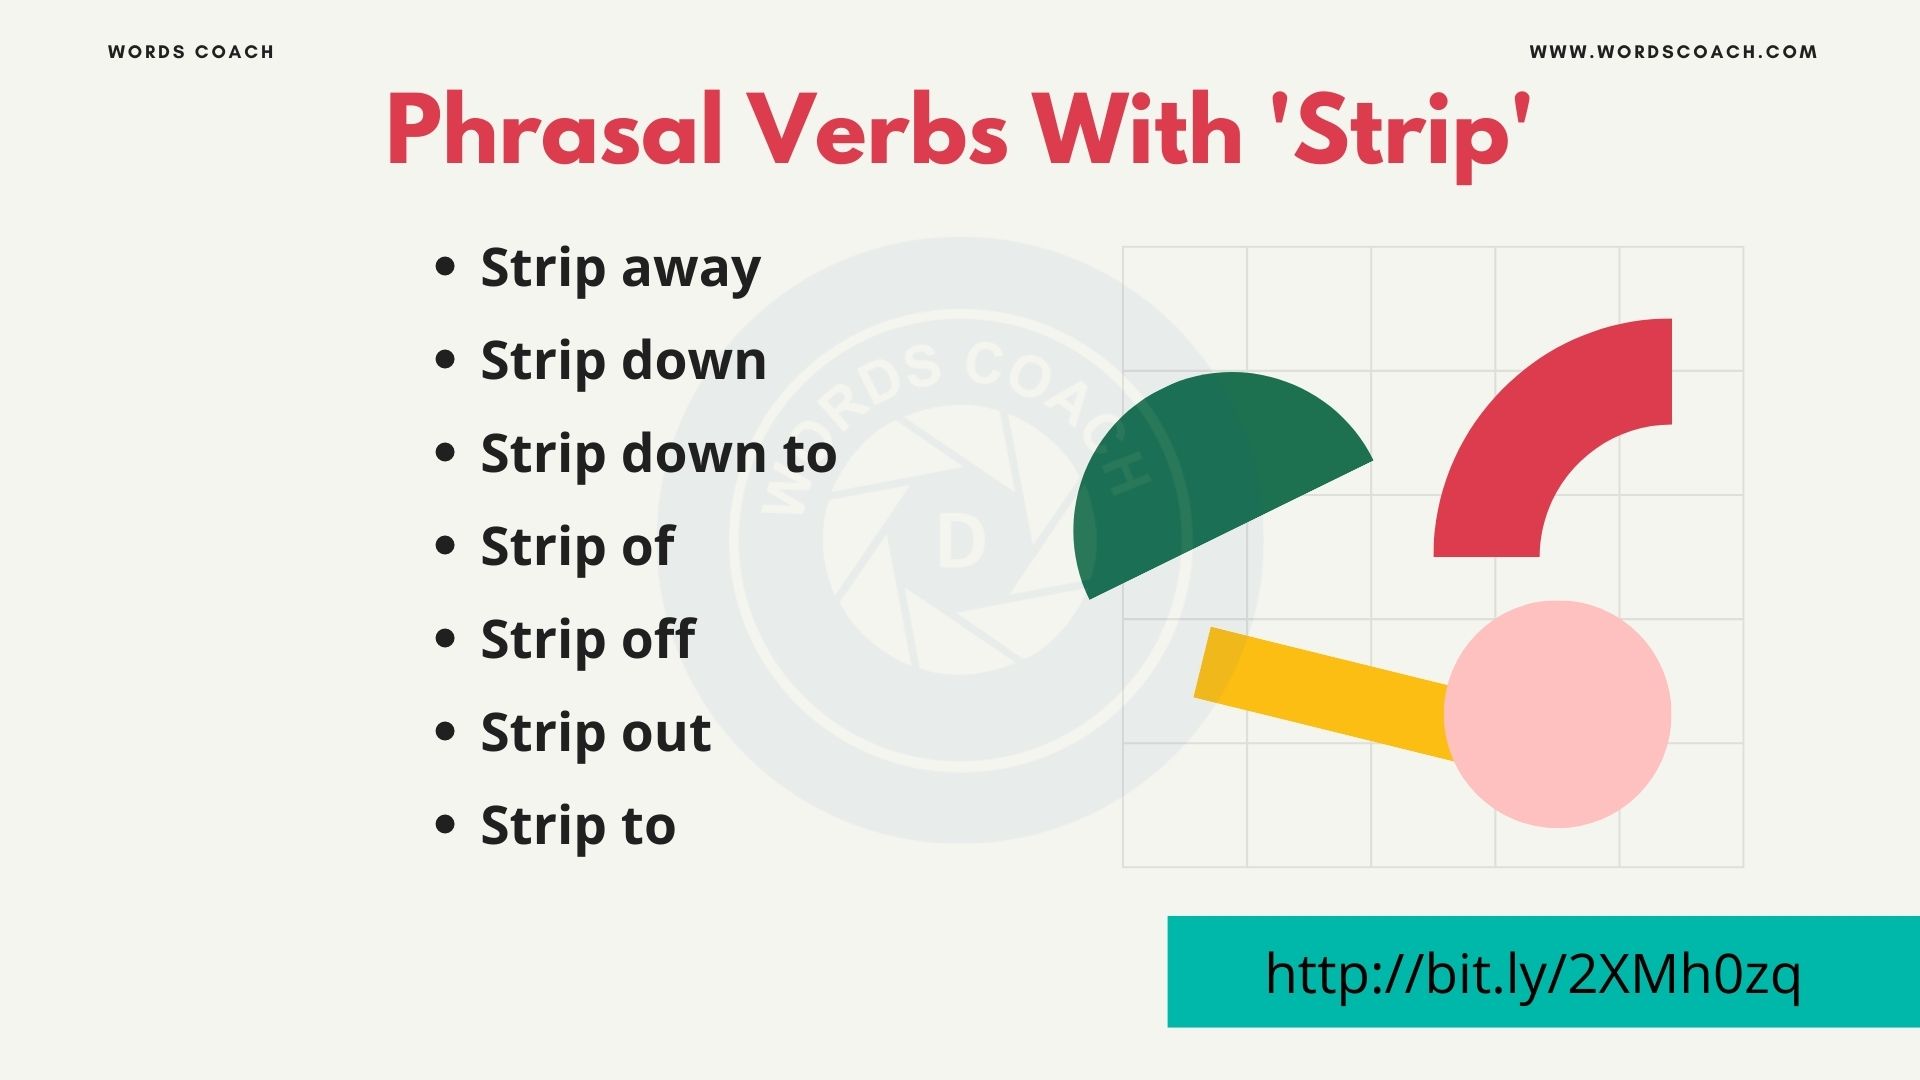 Phrasal Verbs With 'Strip' - wordscoach.com